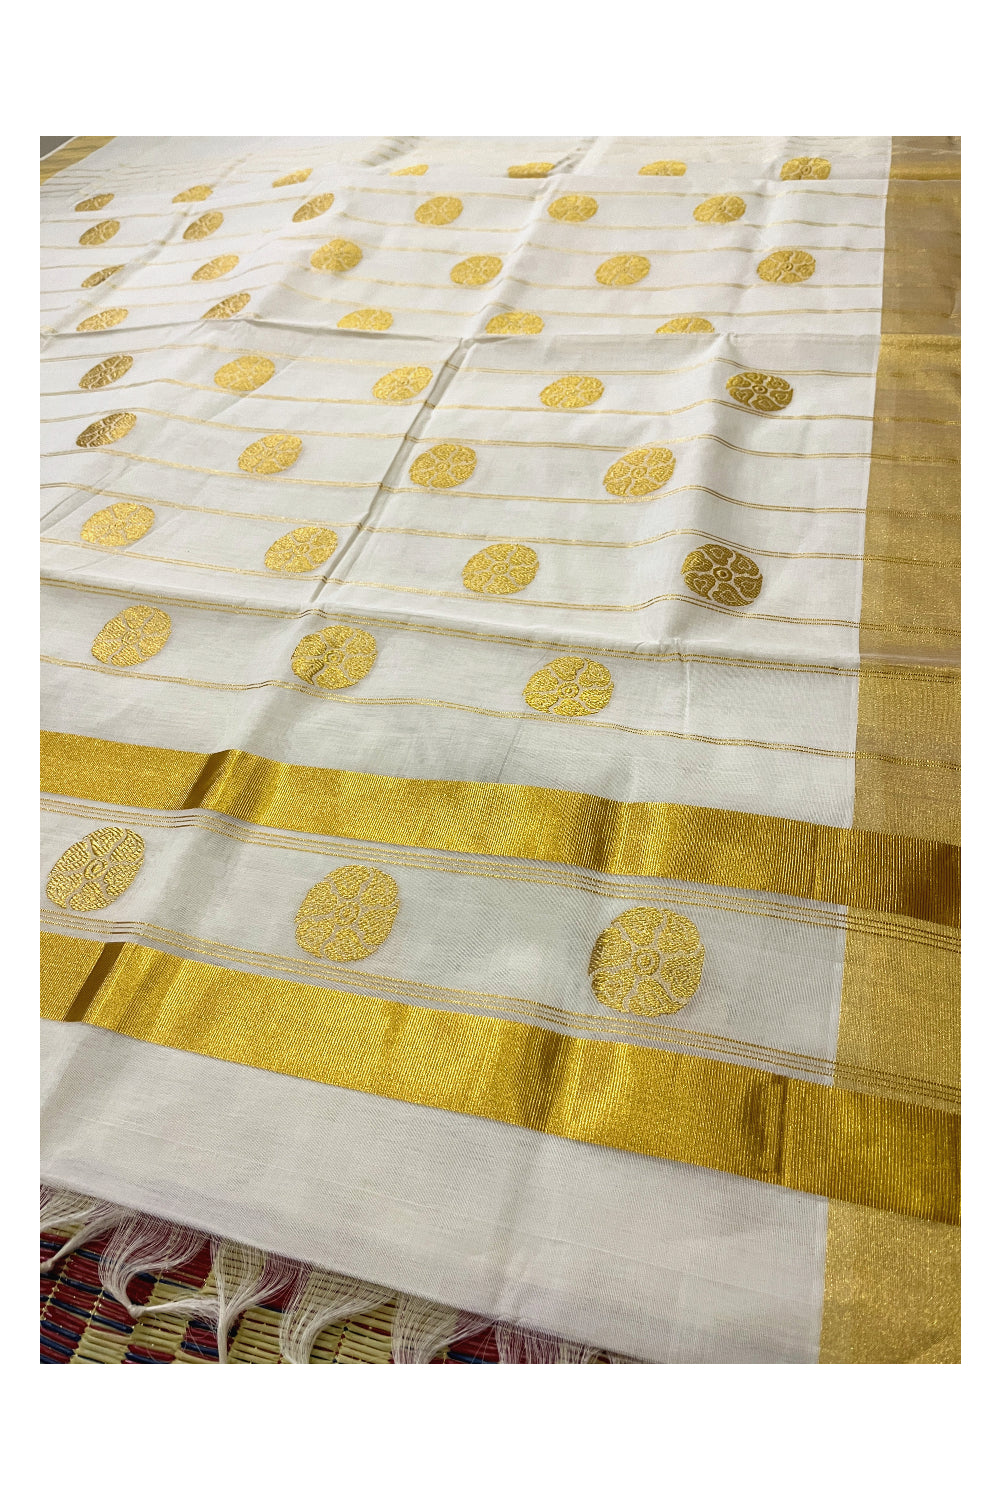 Southloom Premium Handloom Cotton Kasavu Saree with Heavy Woven Works